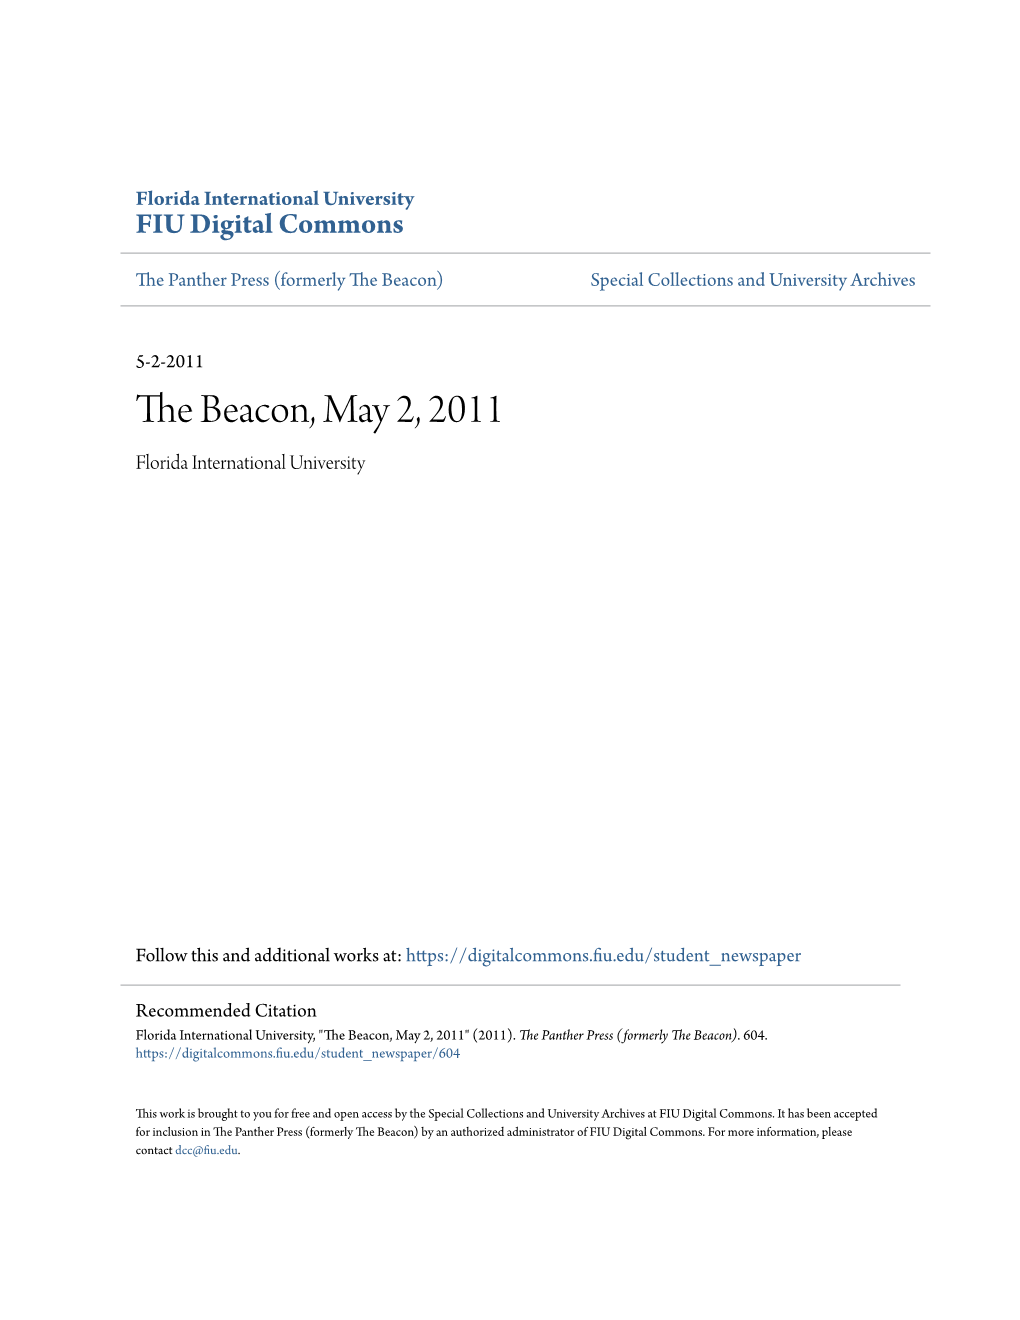 The Beacon, May 2, 2011 Florida International University